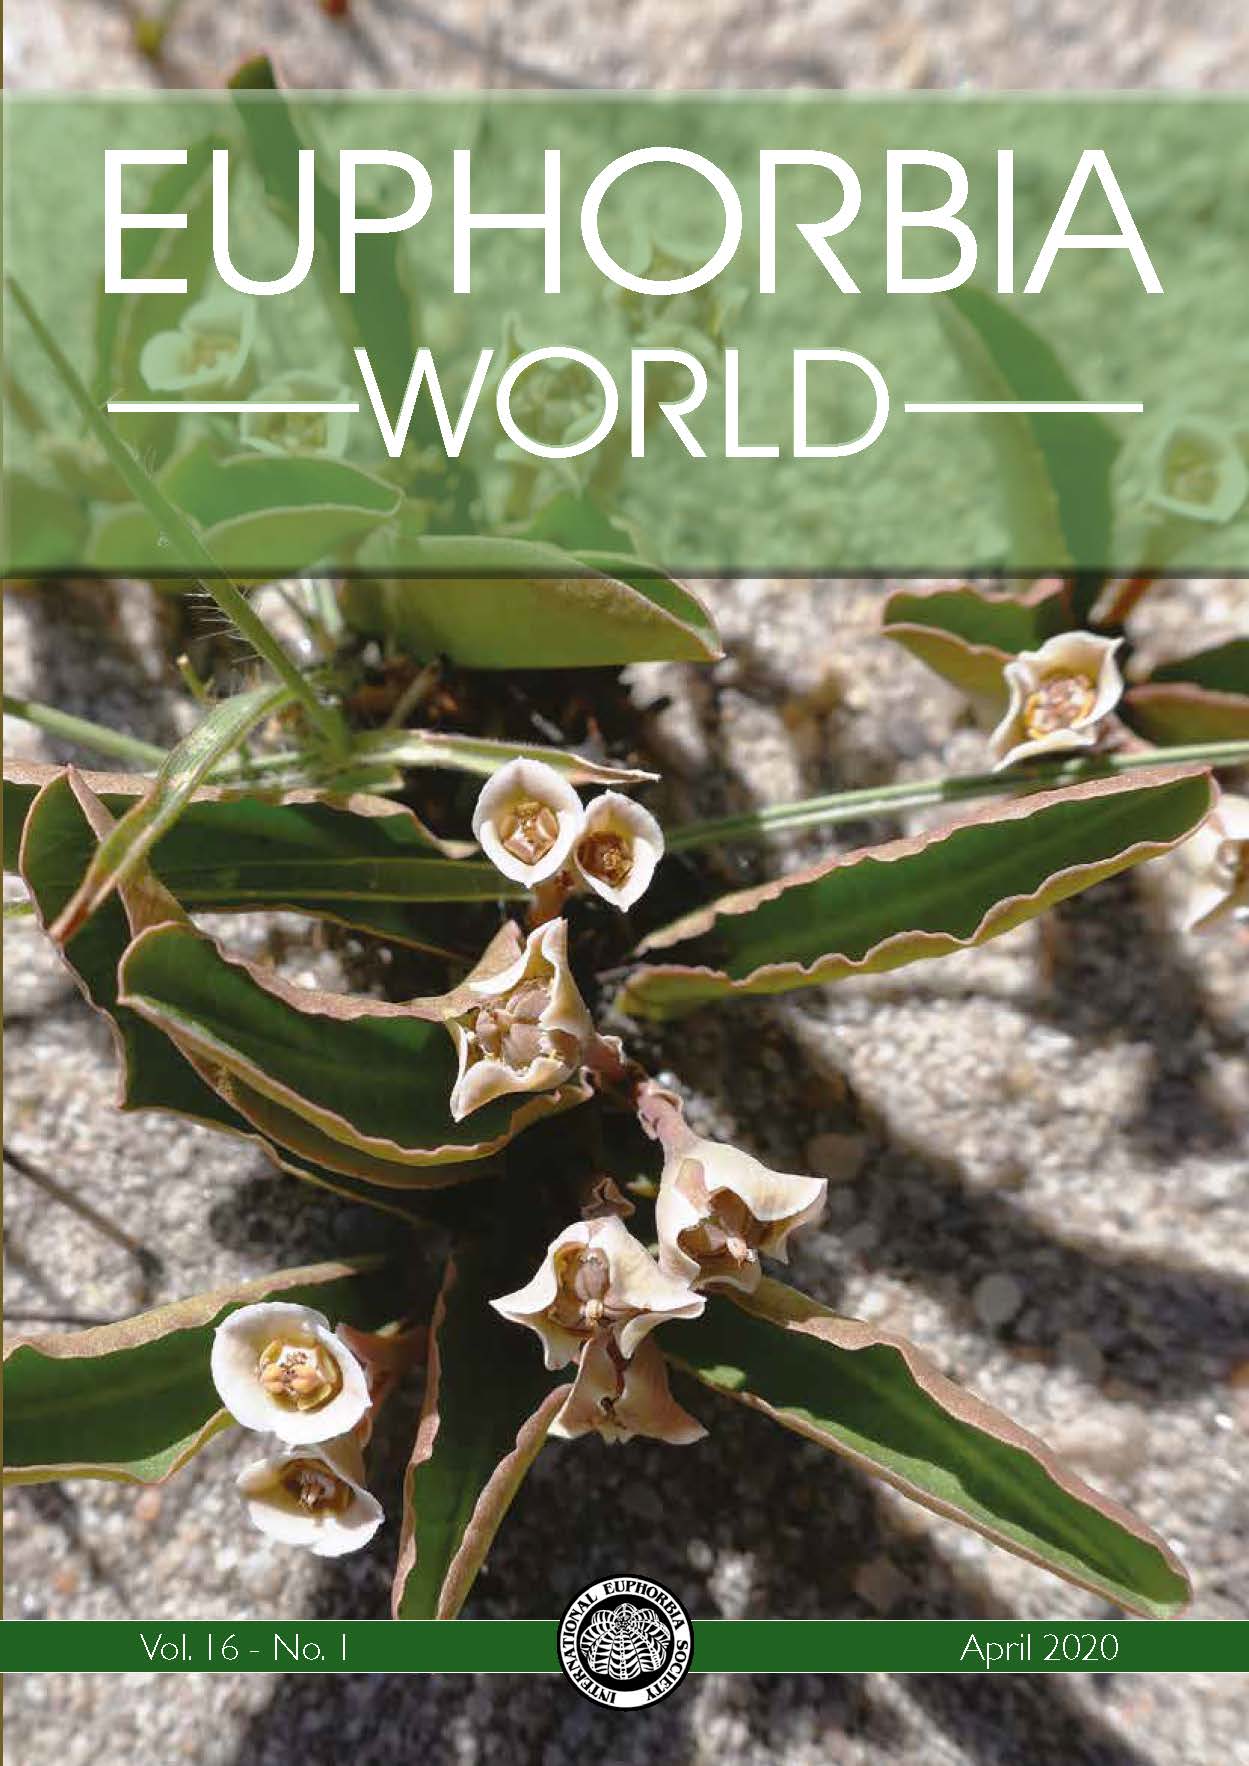 Title  Euphorbia World 15(1)